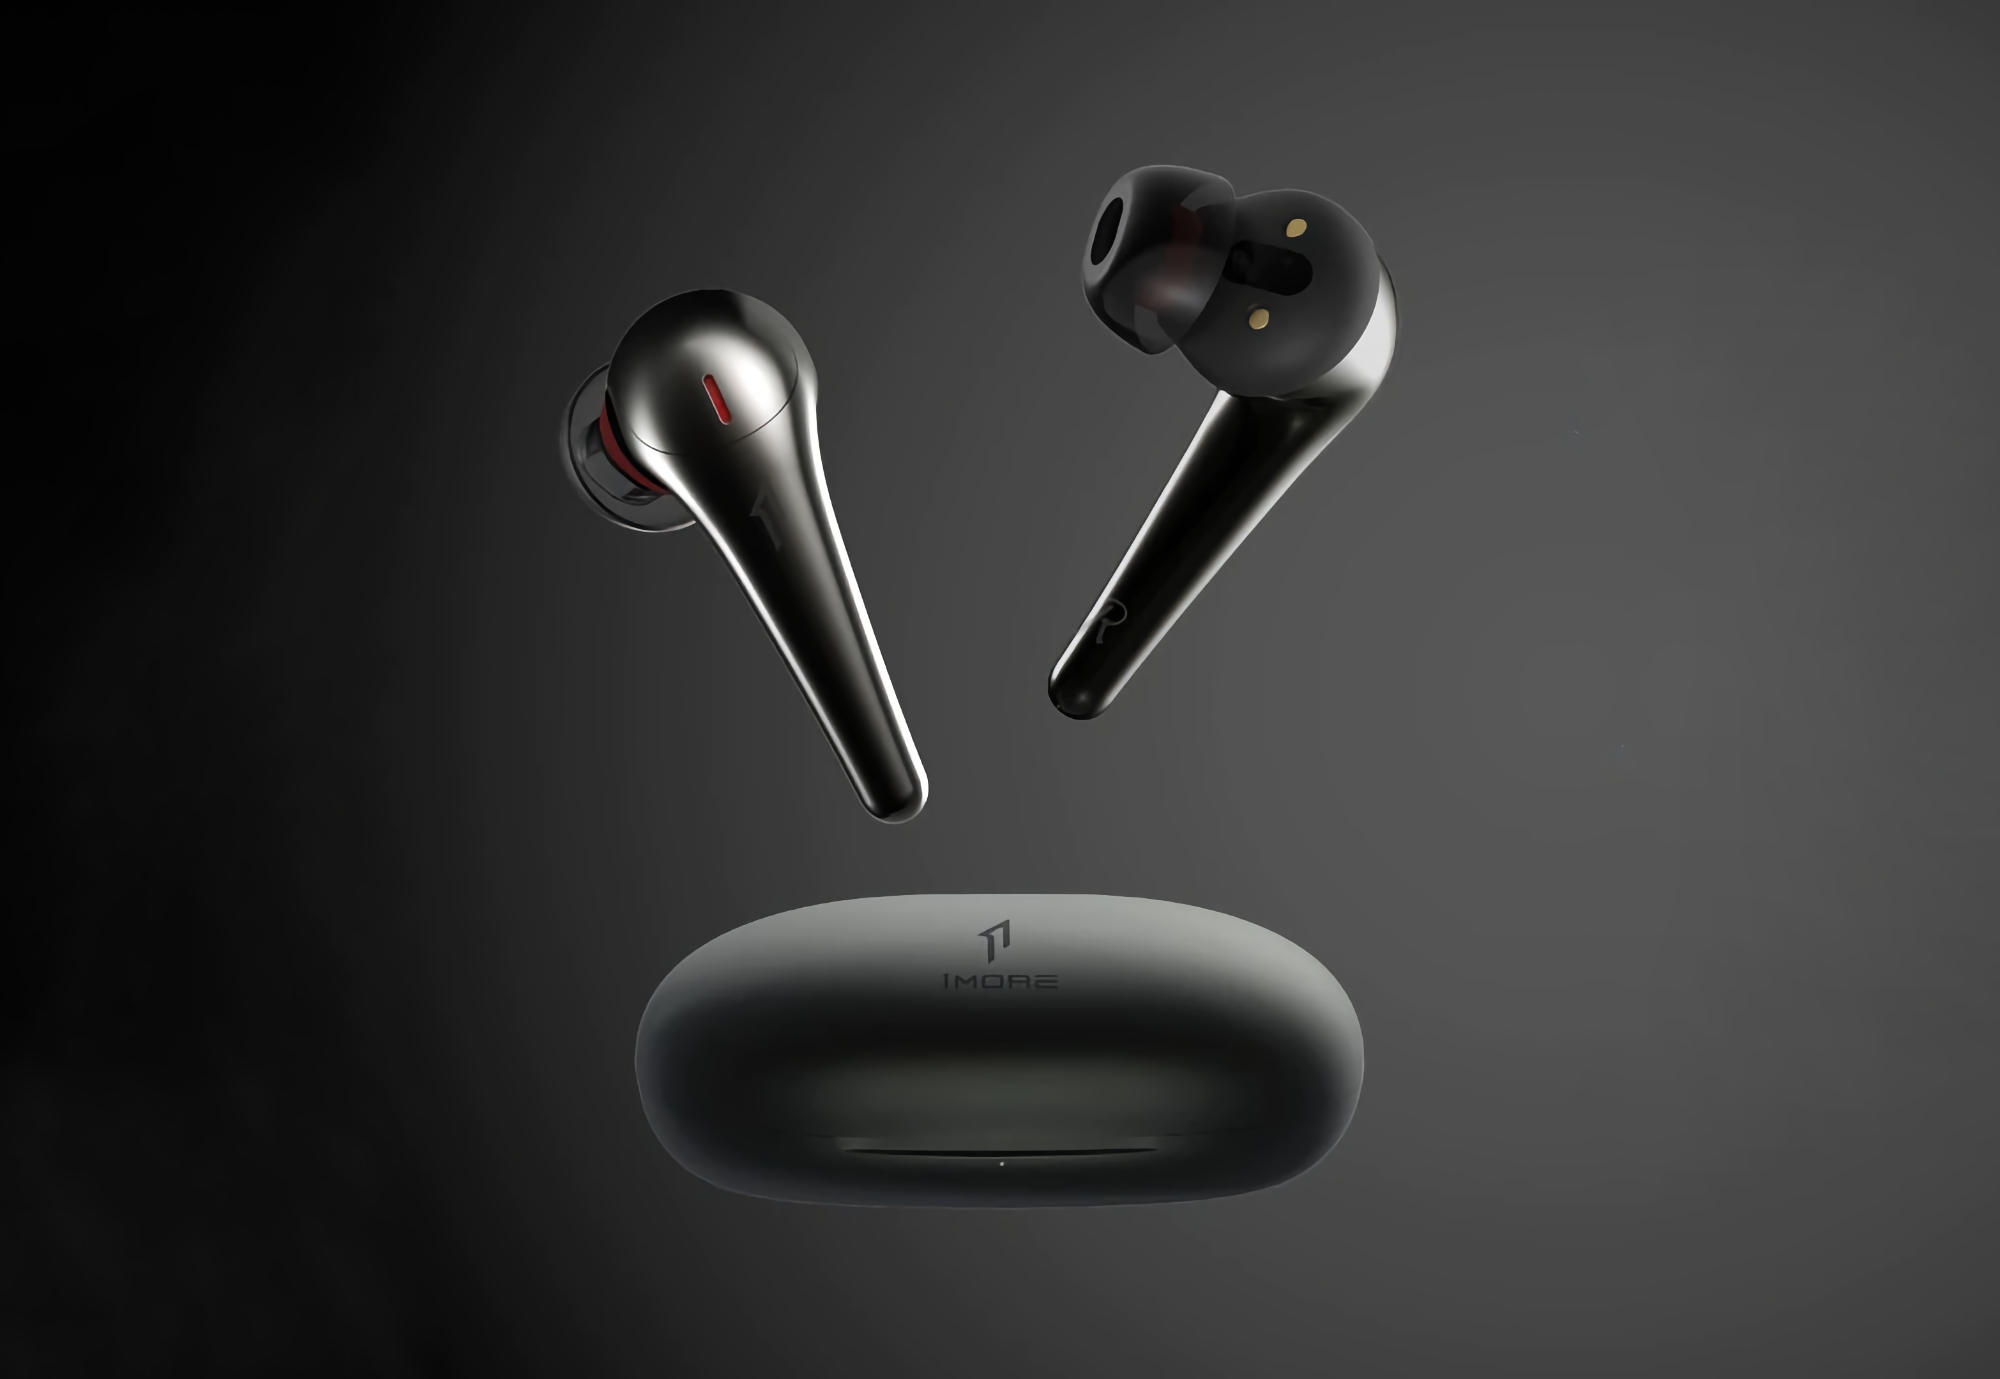 TWS-навушники 1MORE ComfoBuds Pro і 1MORE ComfoBuds 2 можна купити зараз на AliExpress з хорошою знижкою